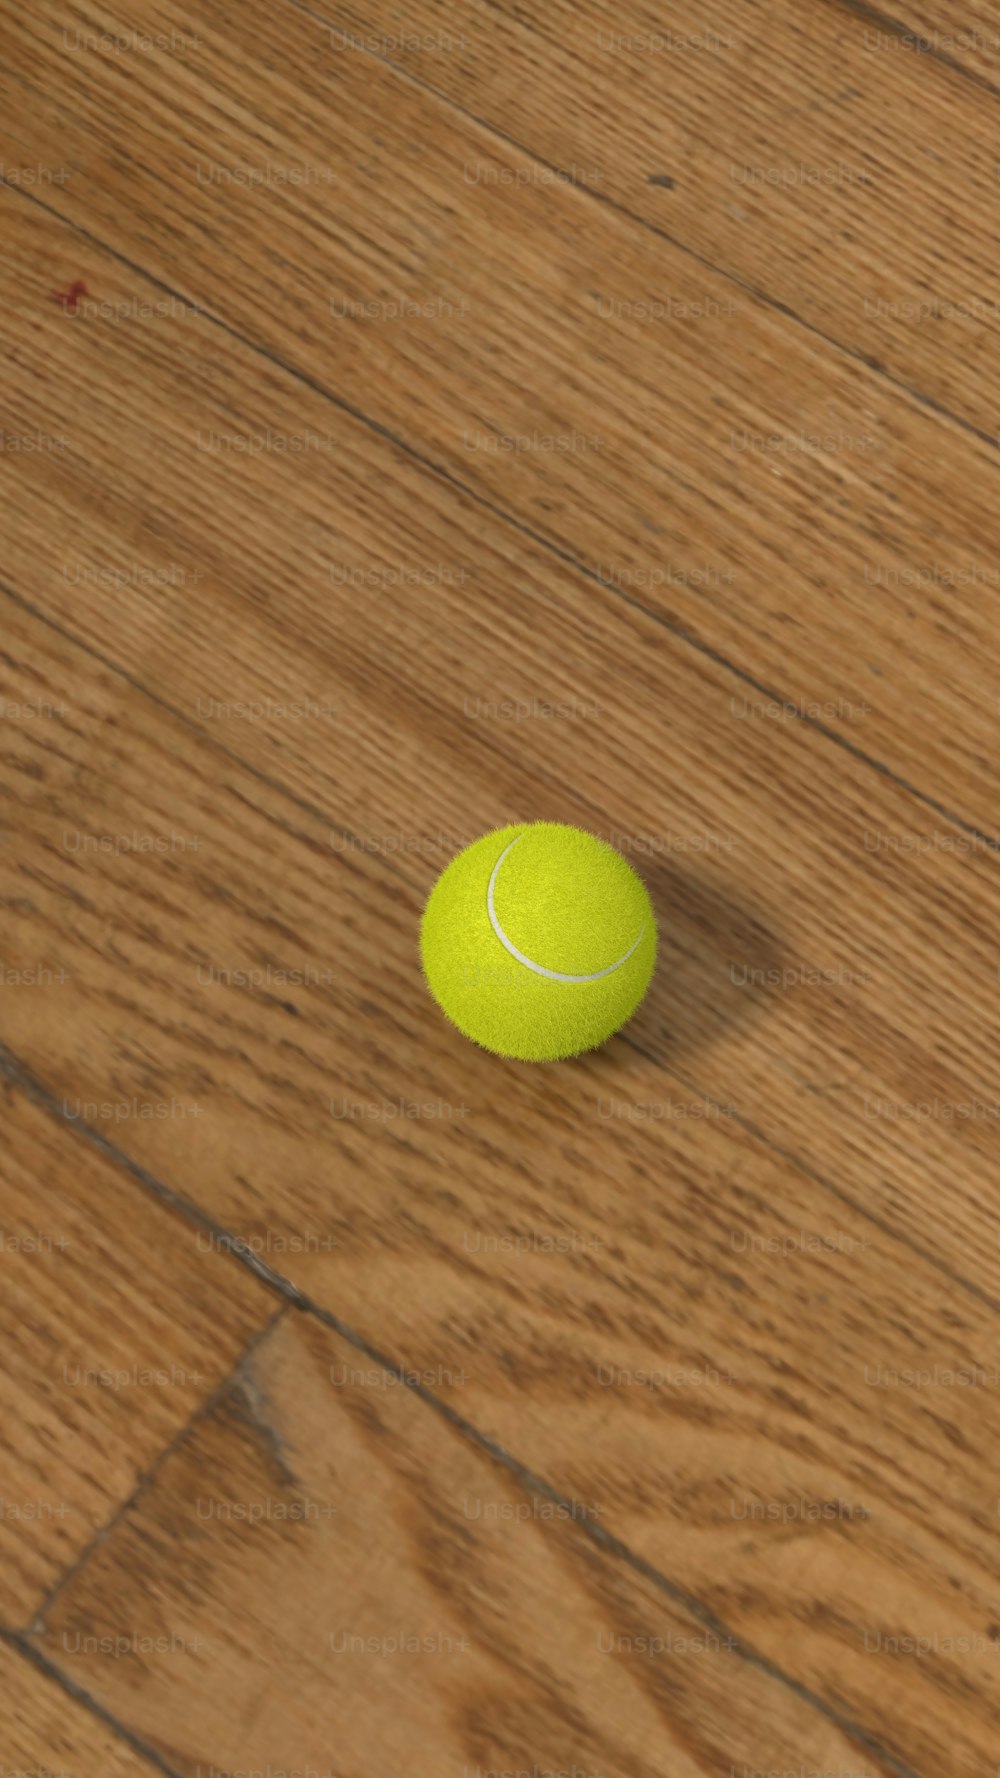 a tennis ball sitting on a wooden floor